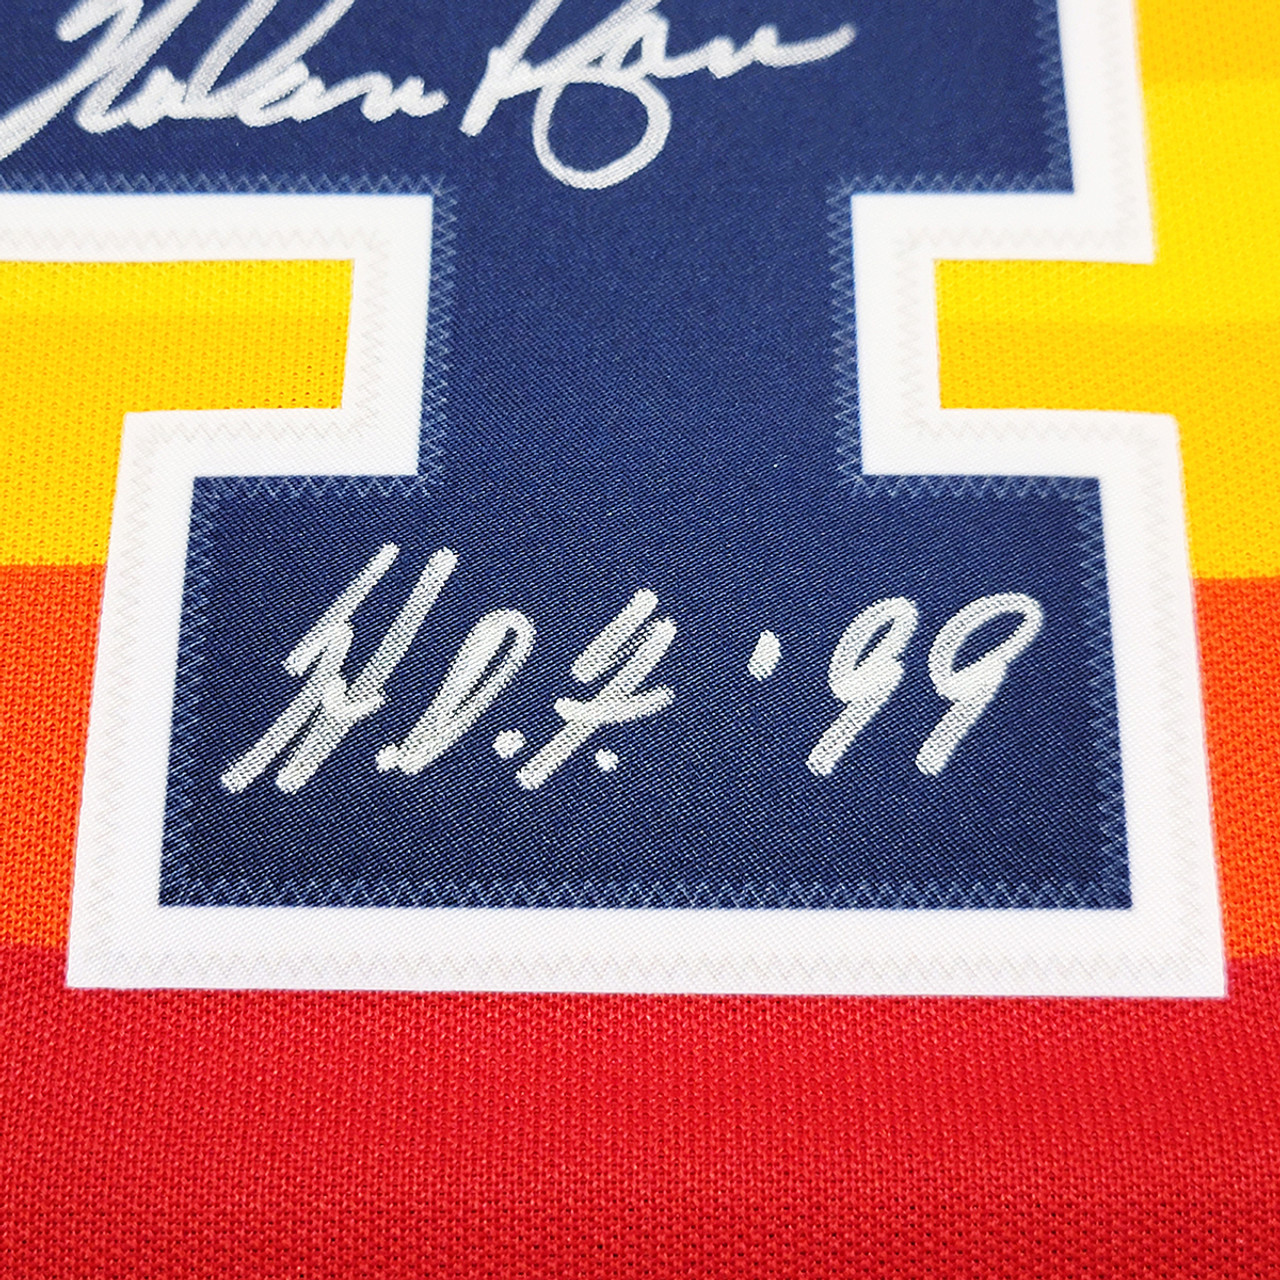 Nolan Ryan Autographed HOF 99 Authentic Astros Jersey